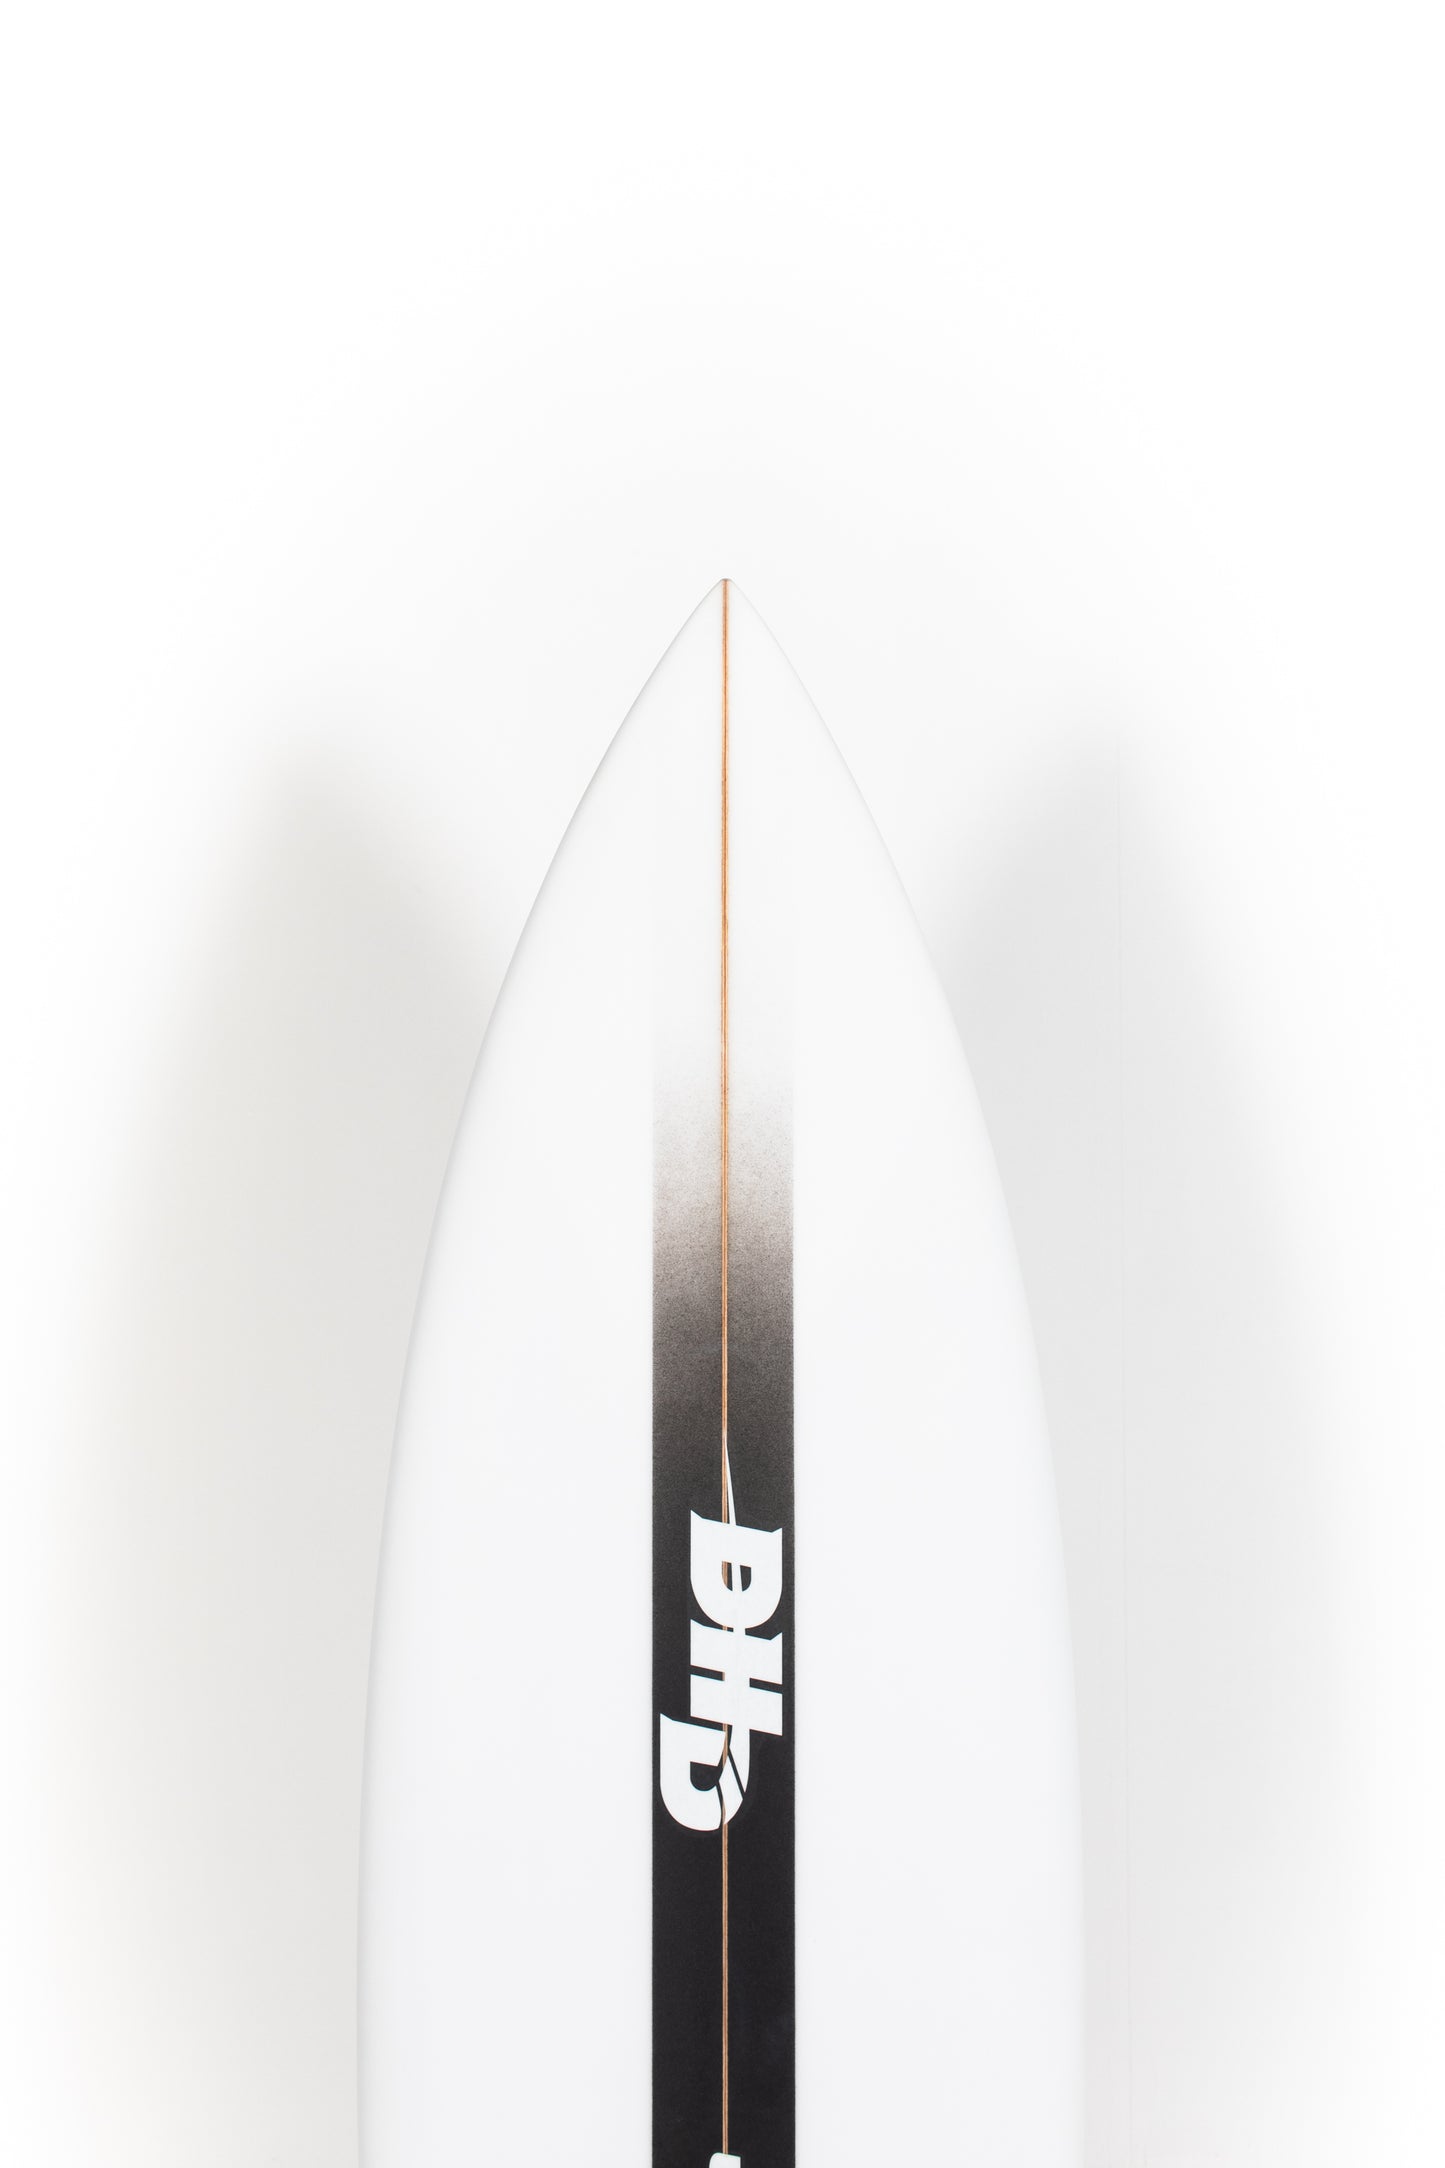 
                  
                    Pukas Surf Shop - DHD - UTOPIA by Darren Handley - 5'10" x 18 7/8" x 2 3/8" - 27.5L - DHDUTO510
                  
                